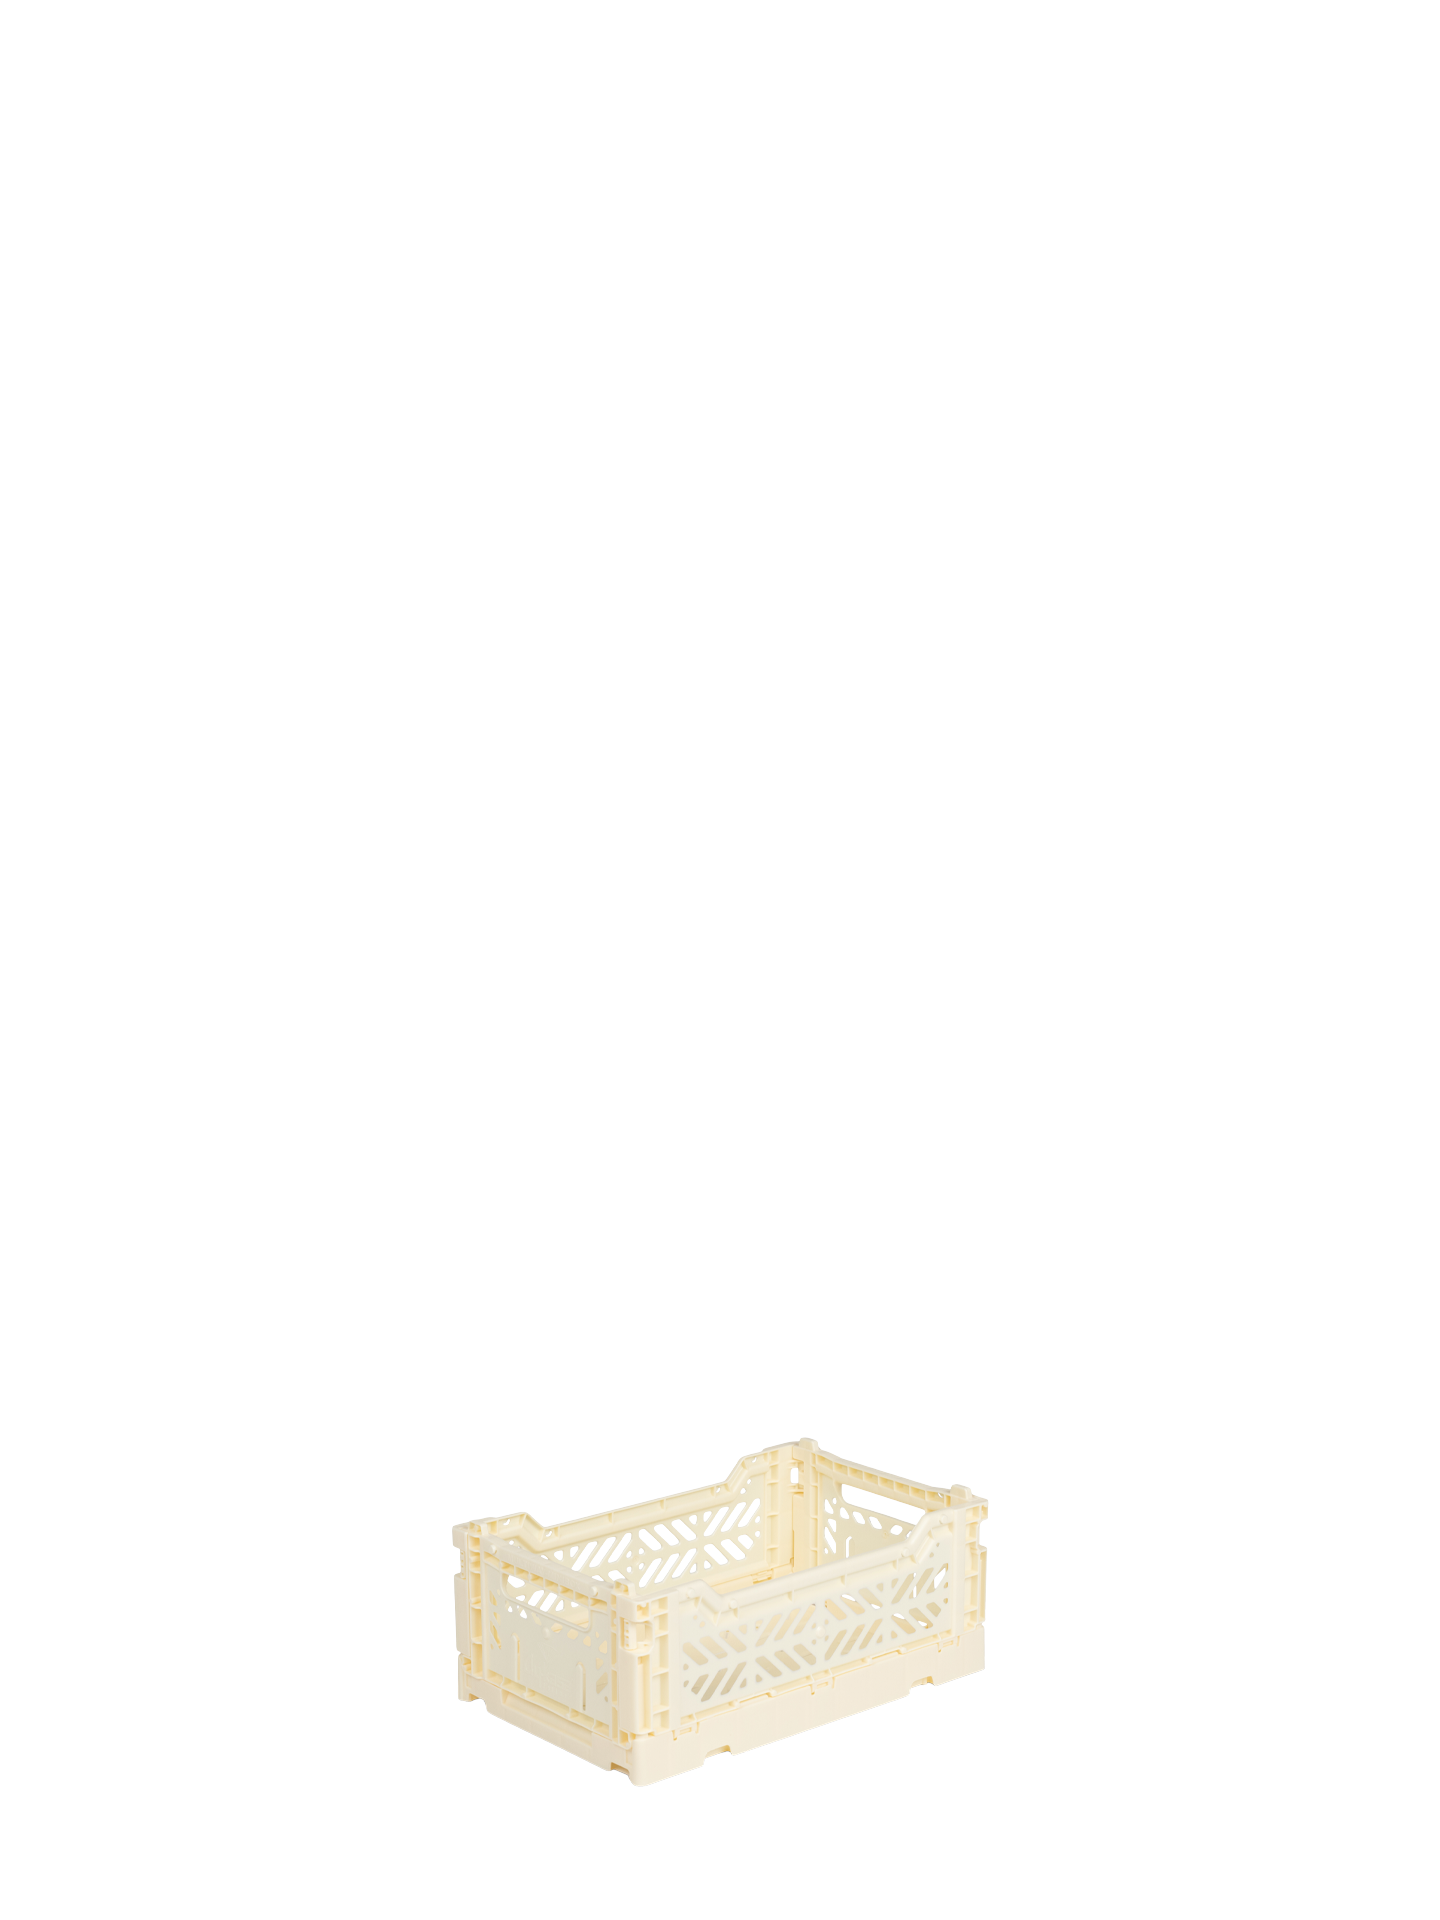 Mini Aykasa crate in cream stacks and folds